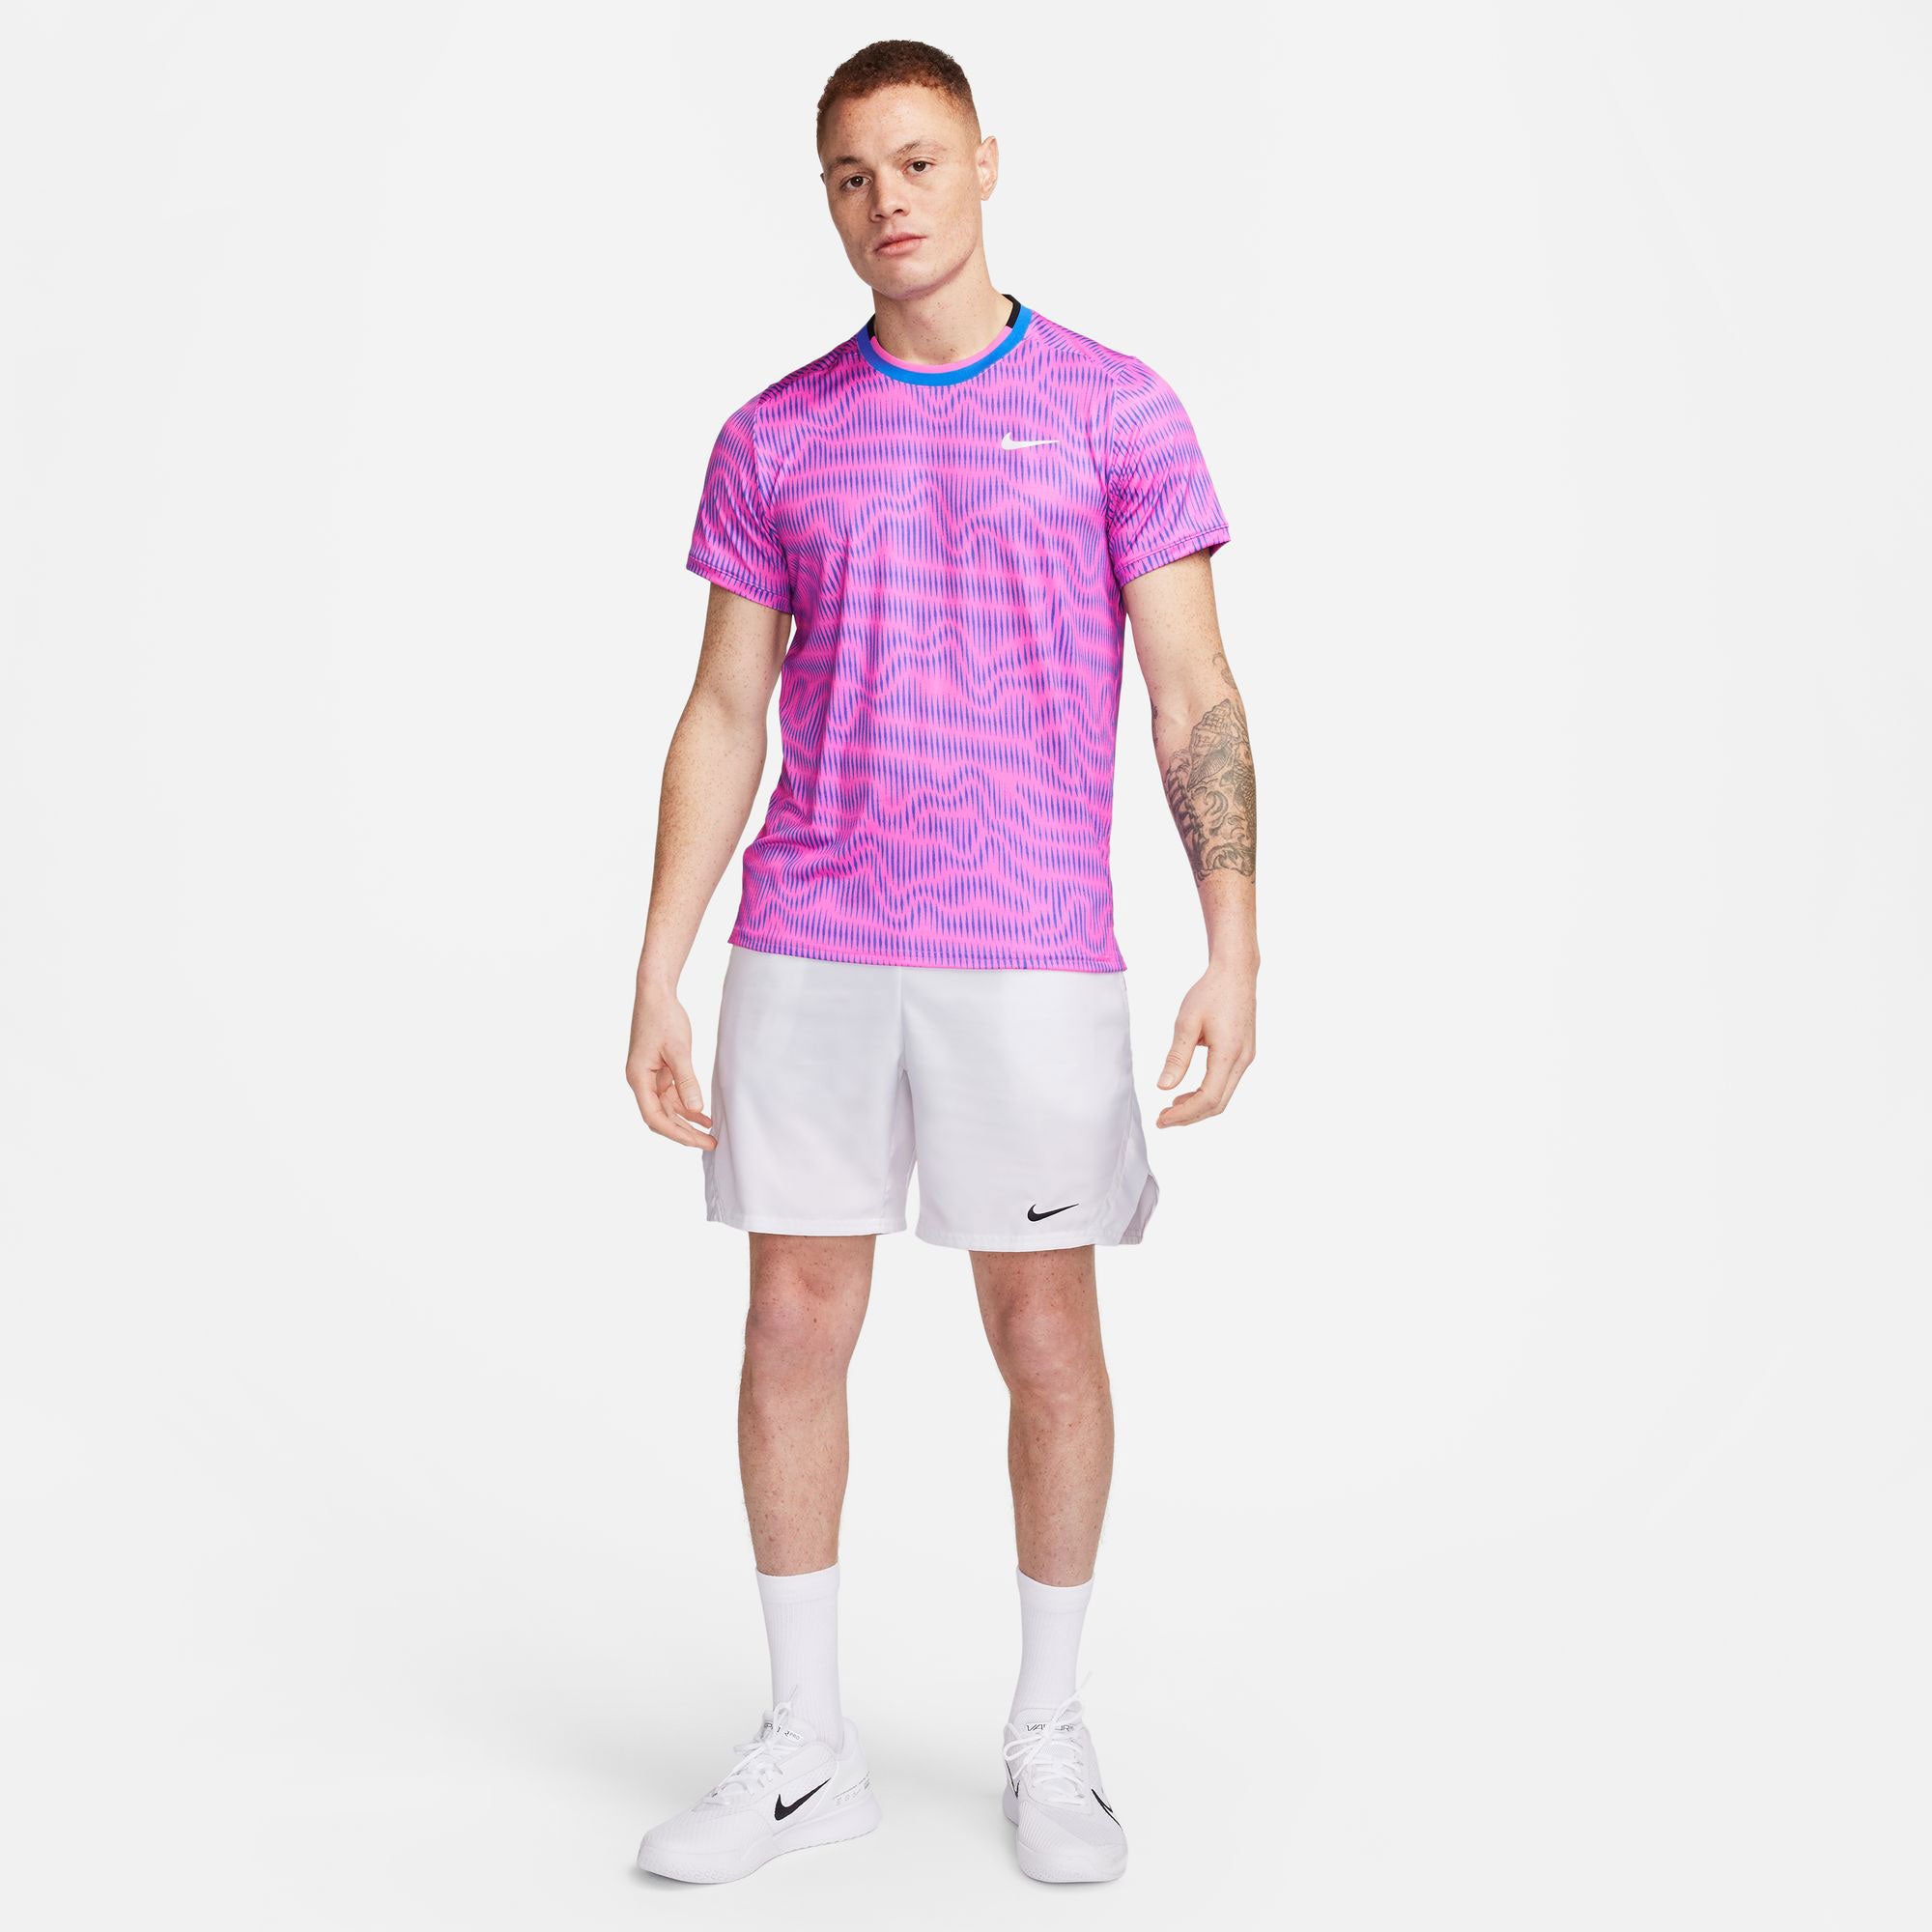 NikeCourt Advantage Men's Dri-FIT Printed Tennis Shirt - Pink (4)